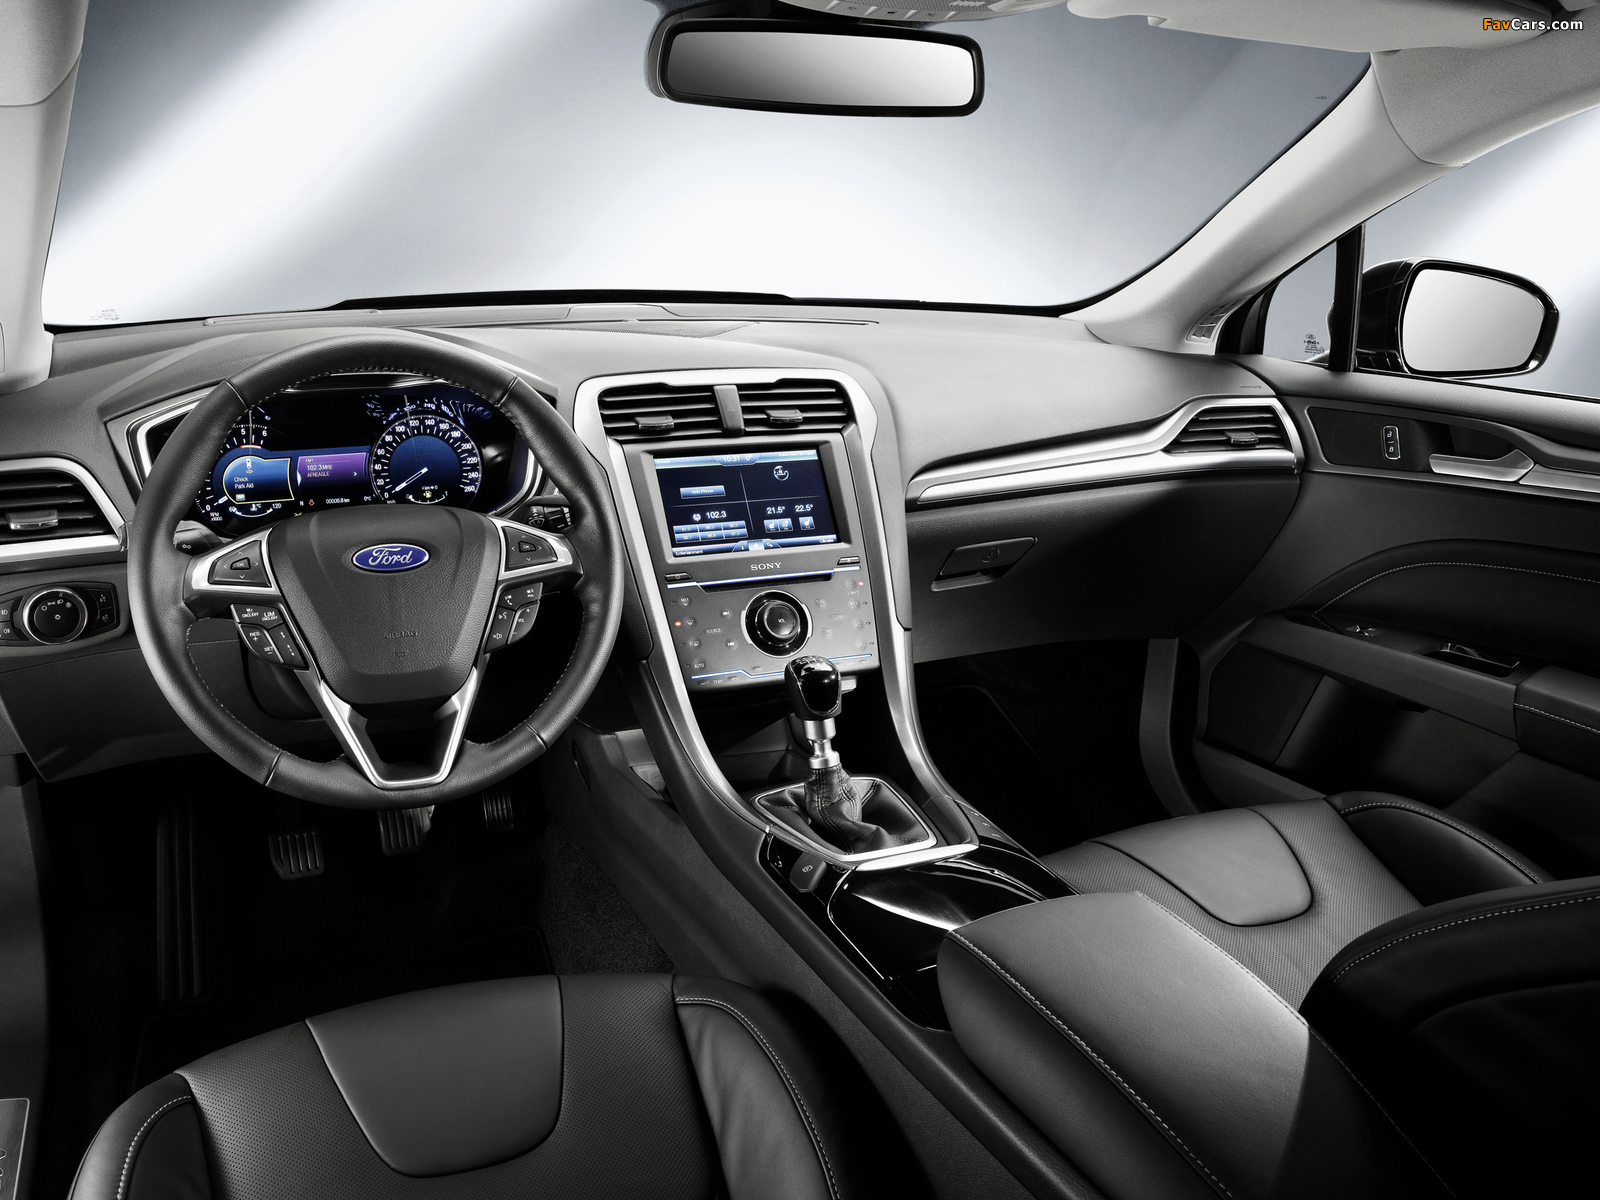 Ford Mondeo Hatchback 2013 images (1600 x 1200)